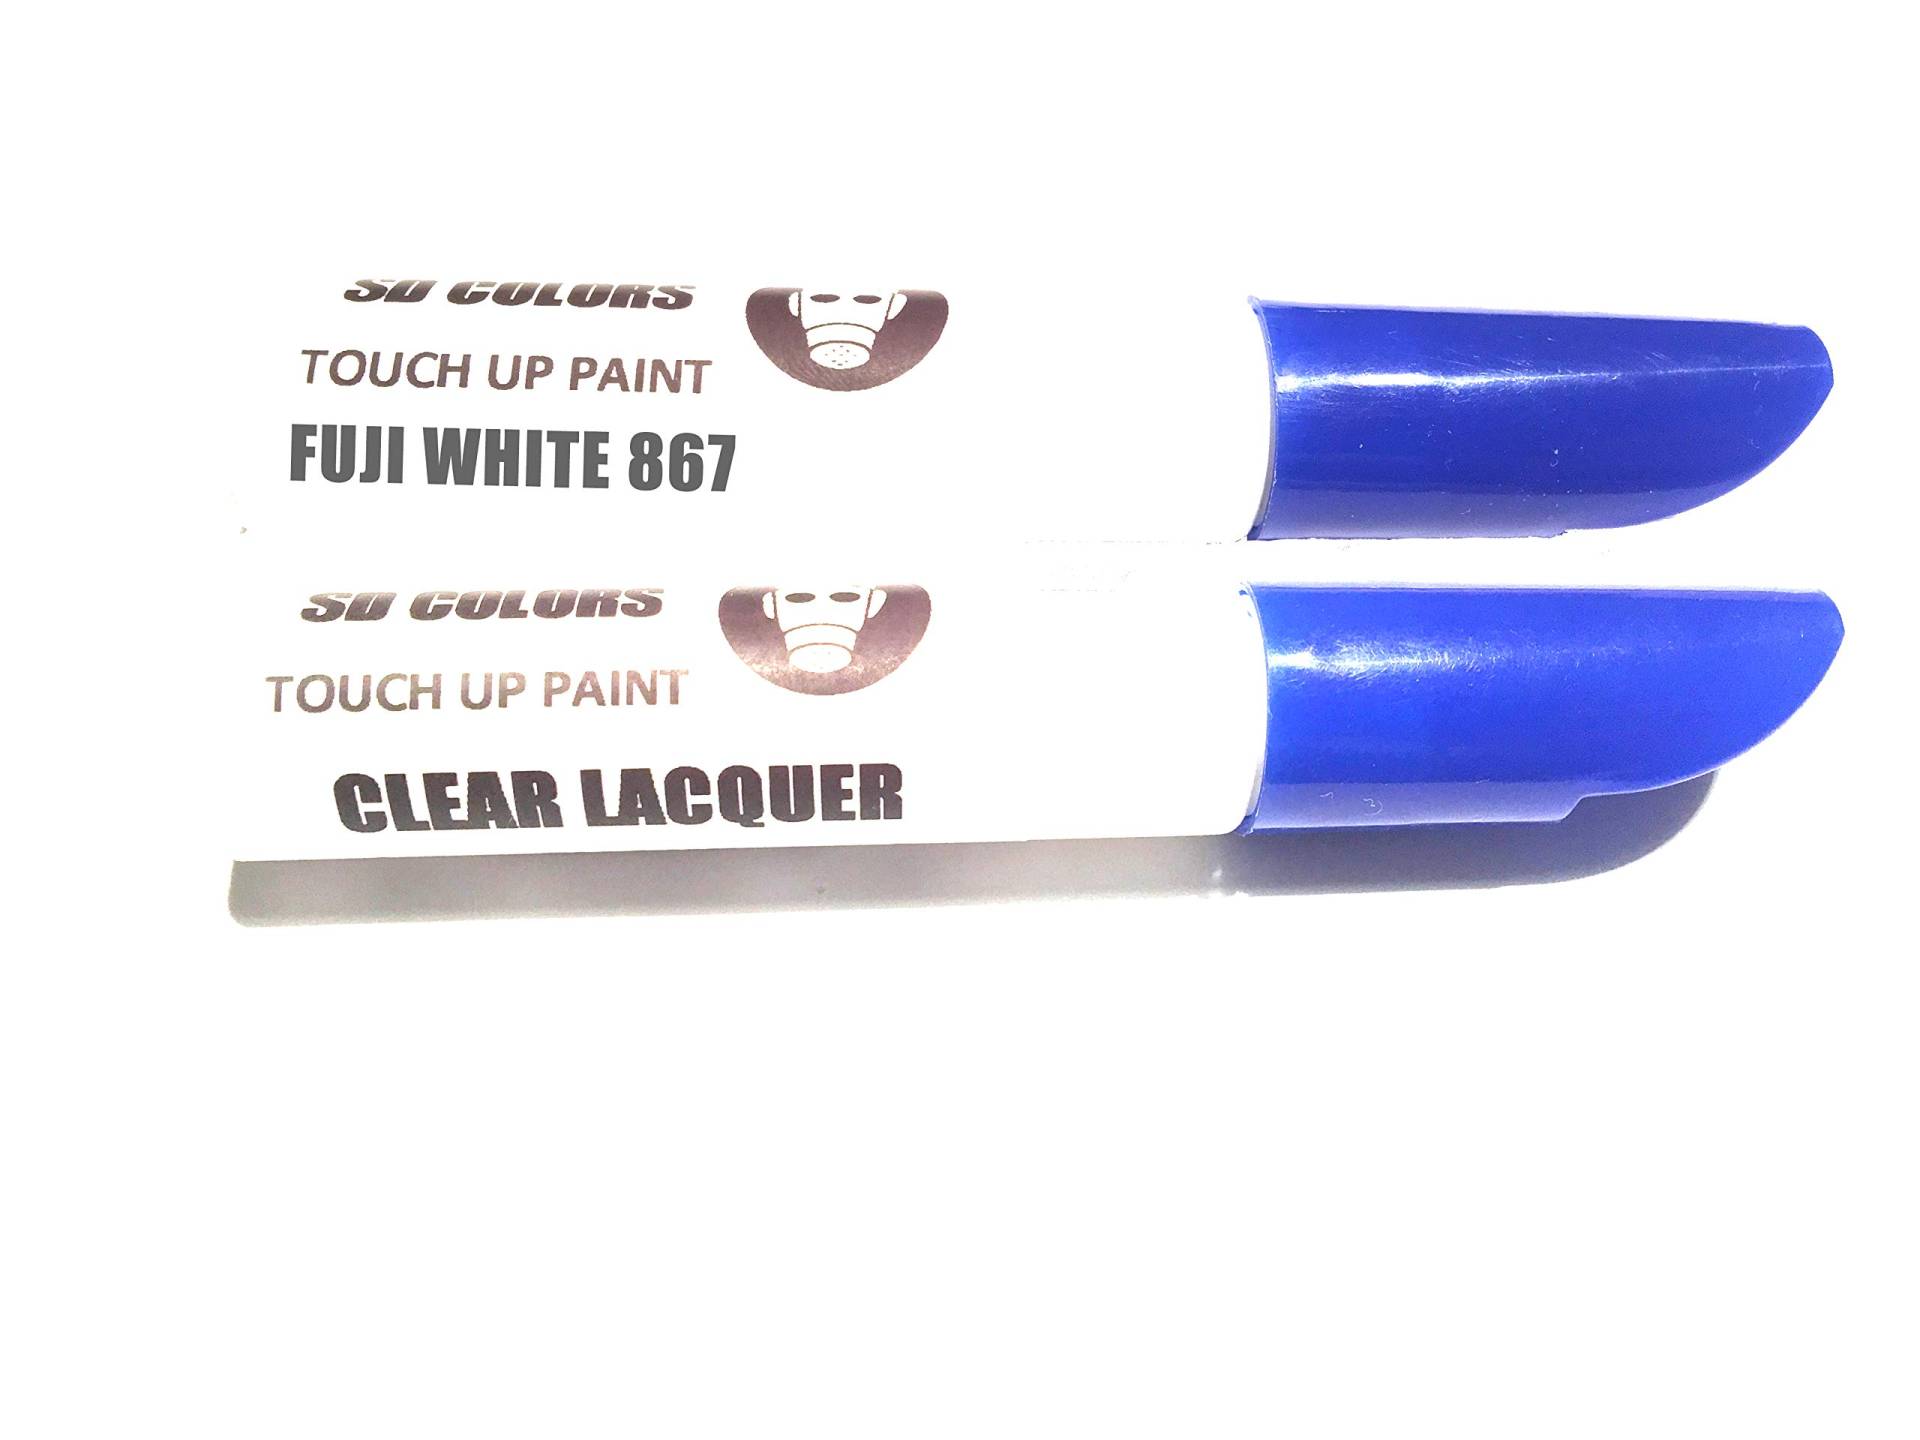 SD COLORS Fuji White 867 Lackstift-Reparatur-Set, 12 ml, Pinsel mit Kratzabsplitterung, Farbcode 867 Fuchsia Weiß (Lack + Lack) von SD COLORS